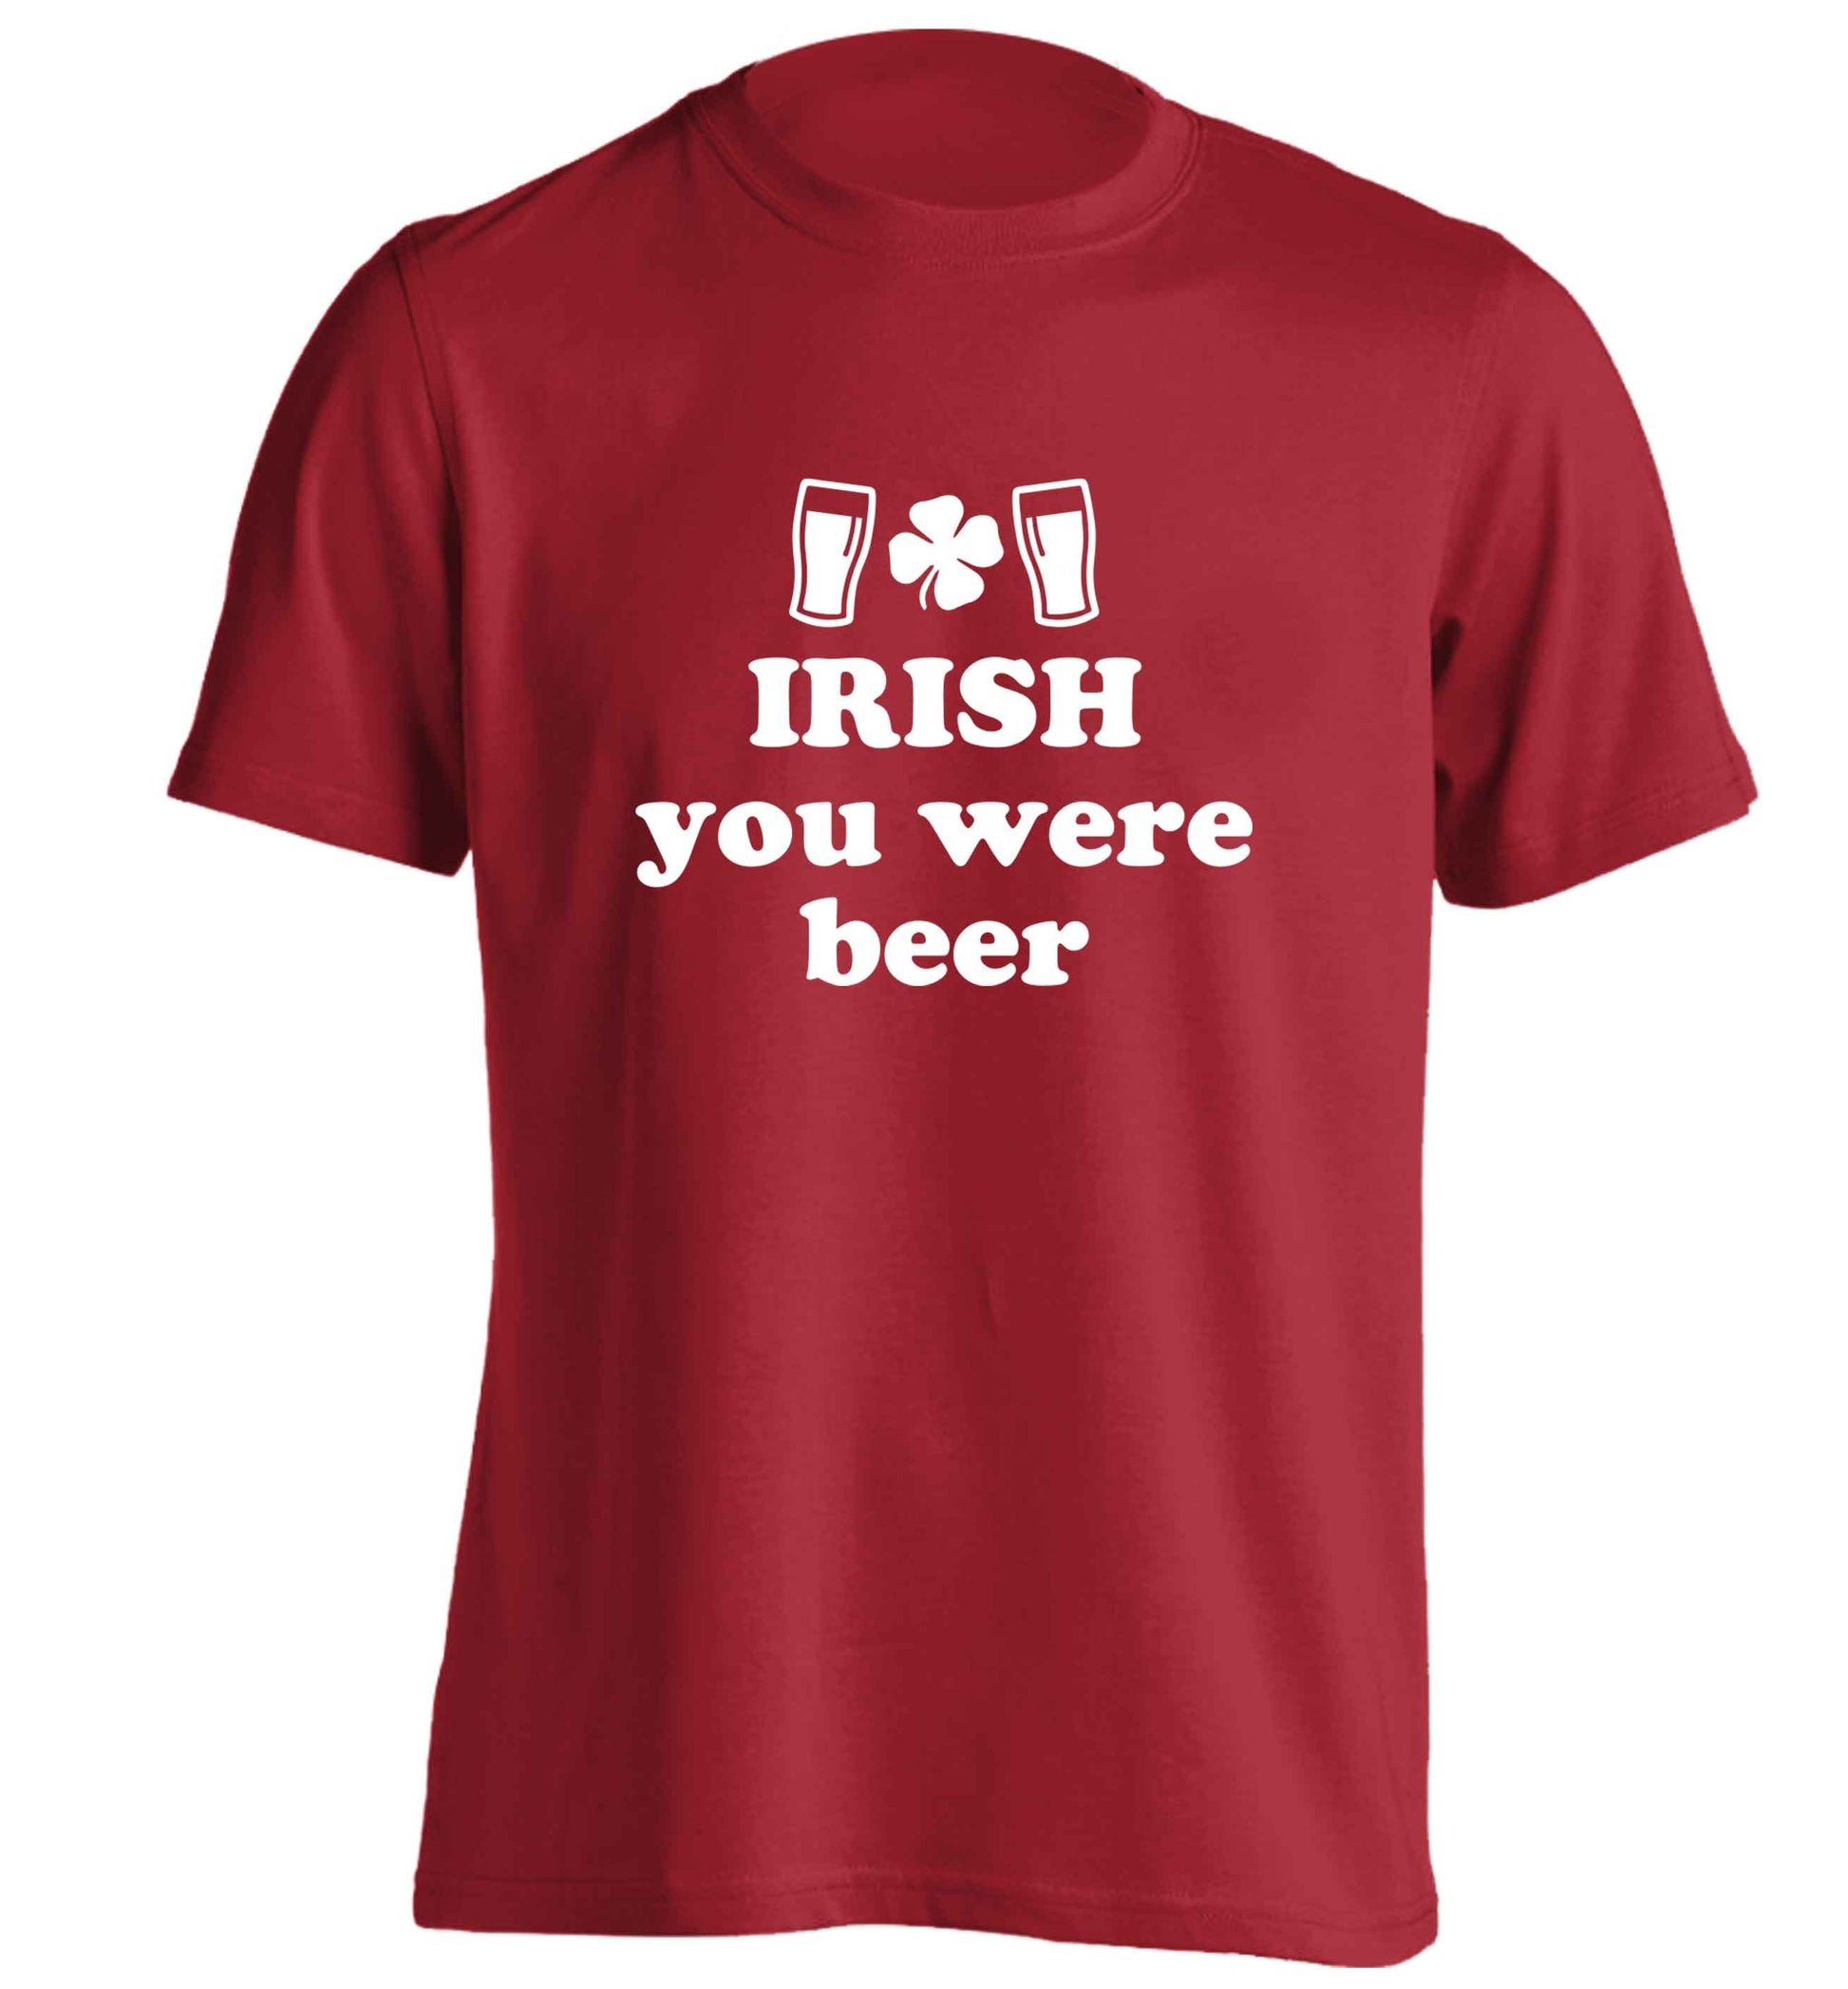 Irish you were beer adults unisex red Tshirt 2XL